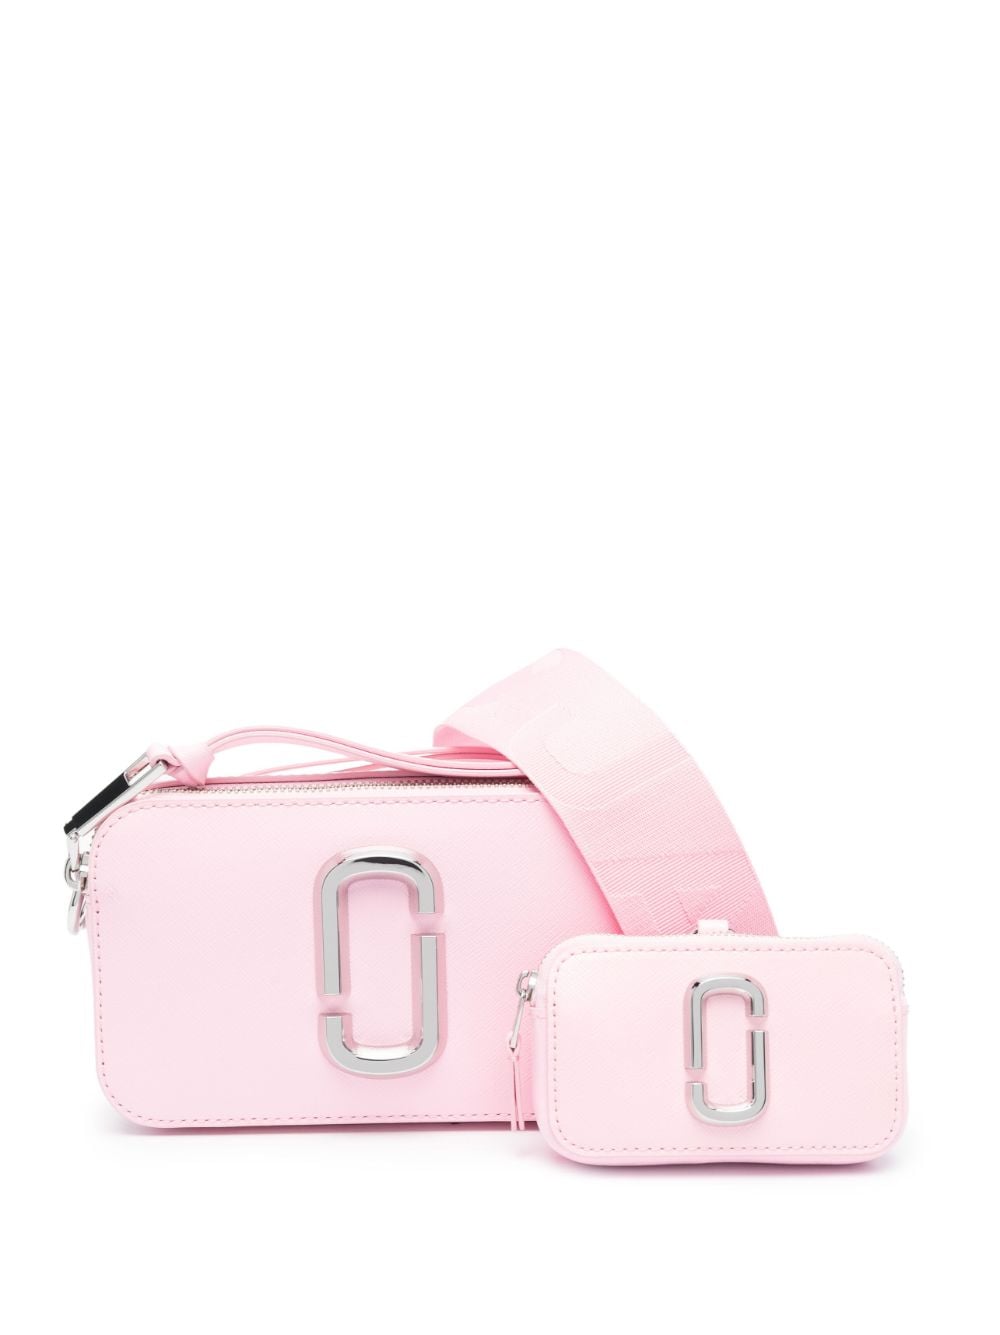 New Design of Ceramic Leather Snapshot Small Camera Crossbody Bag MJ Strap  - Light Pink